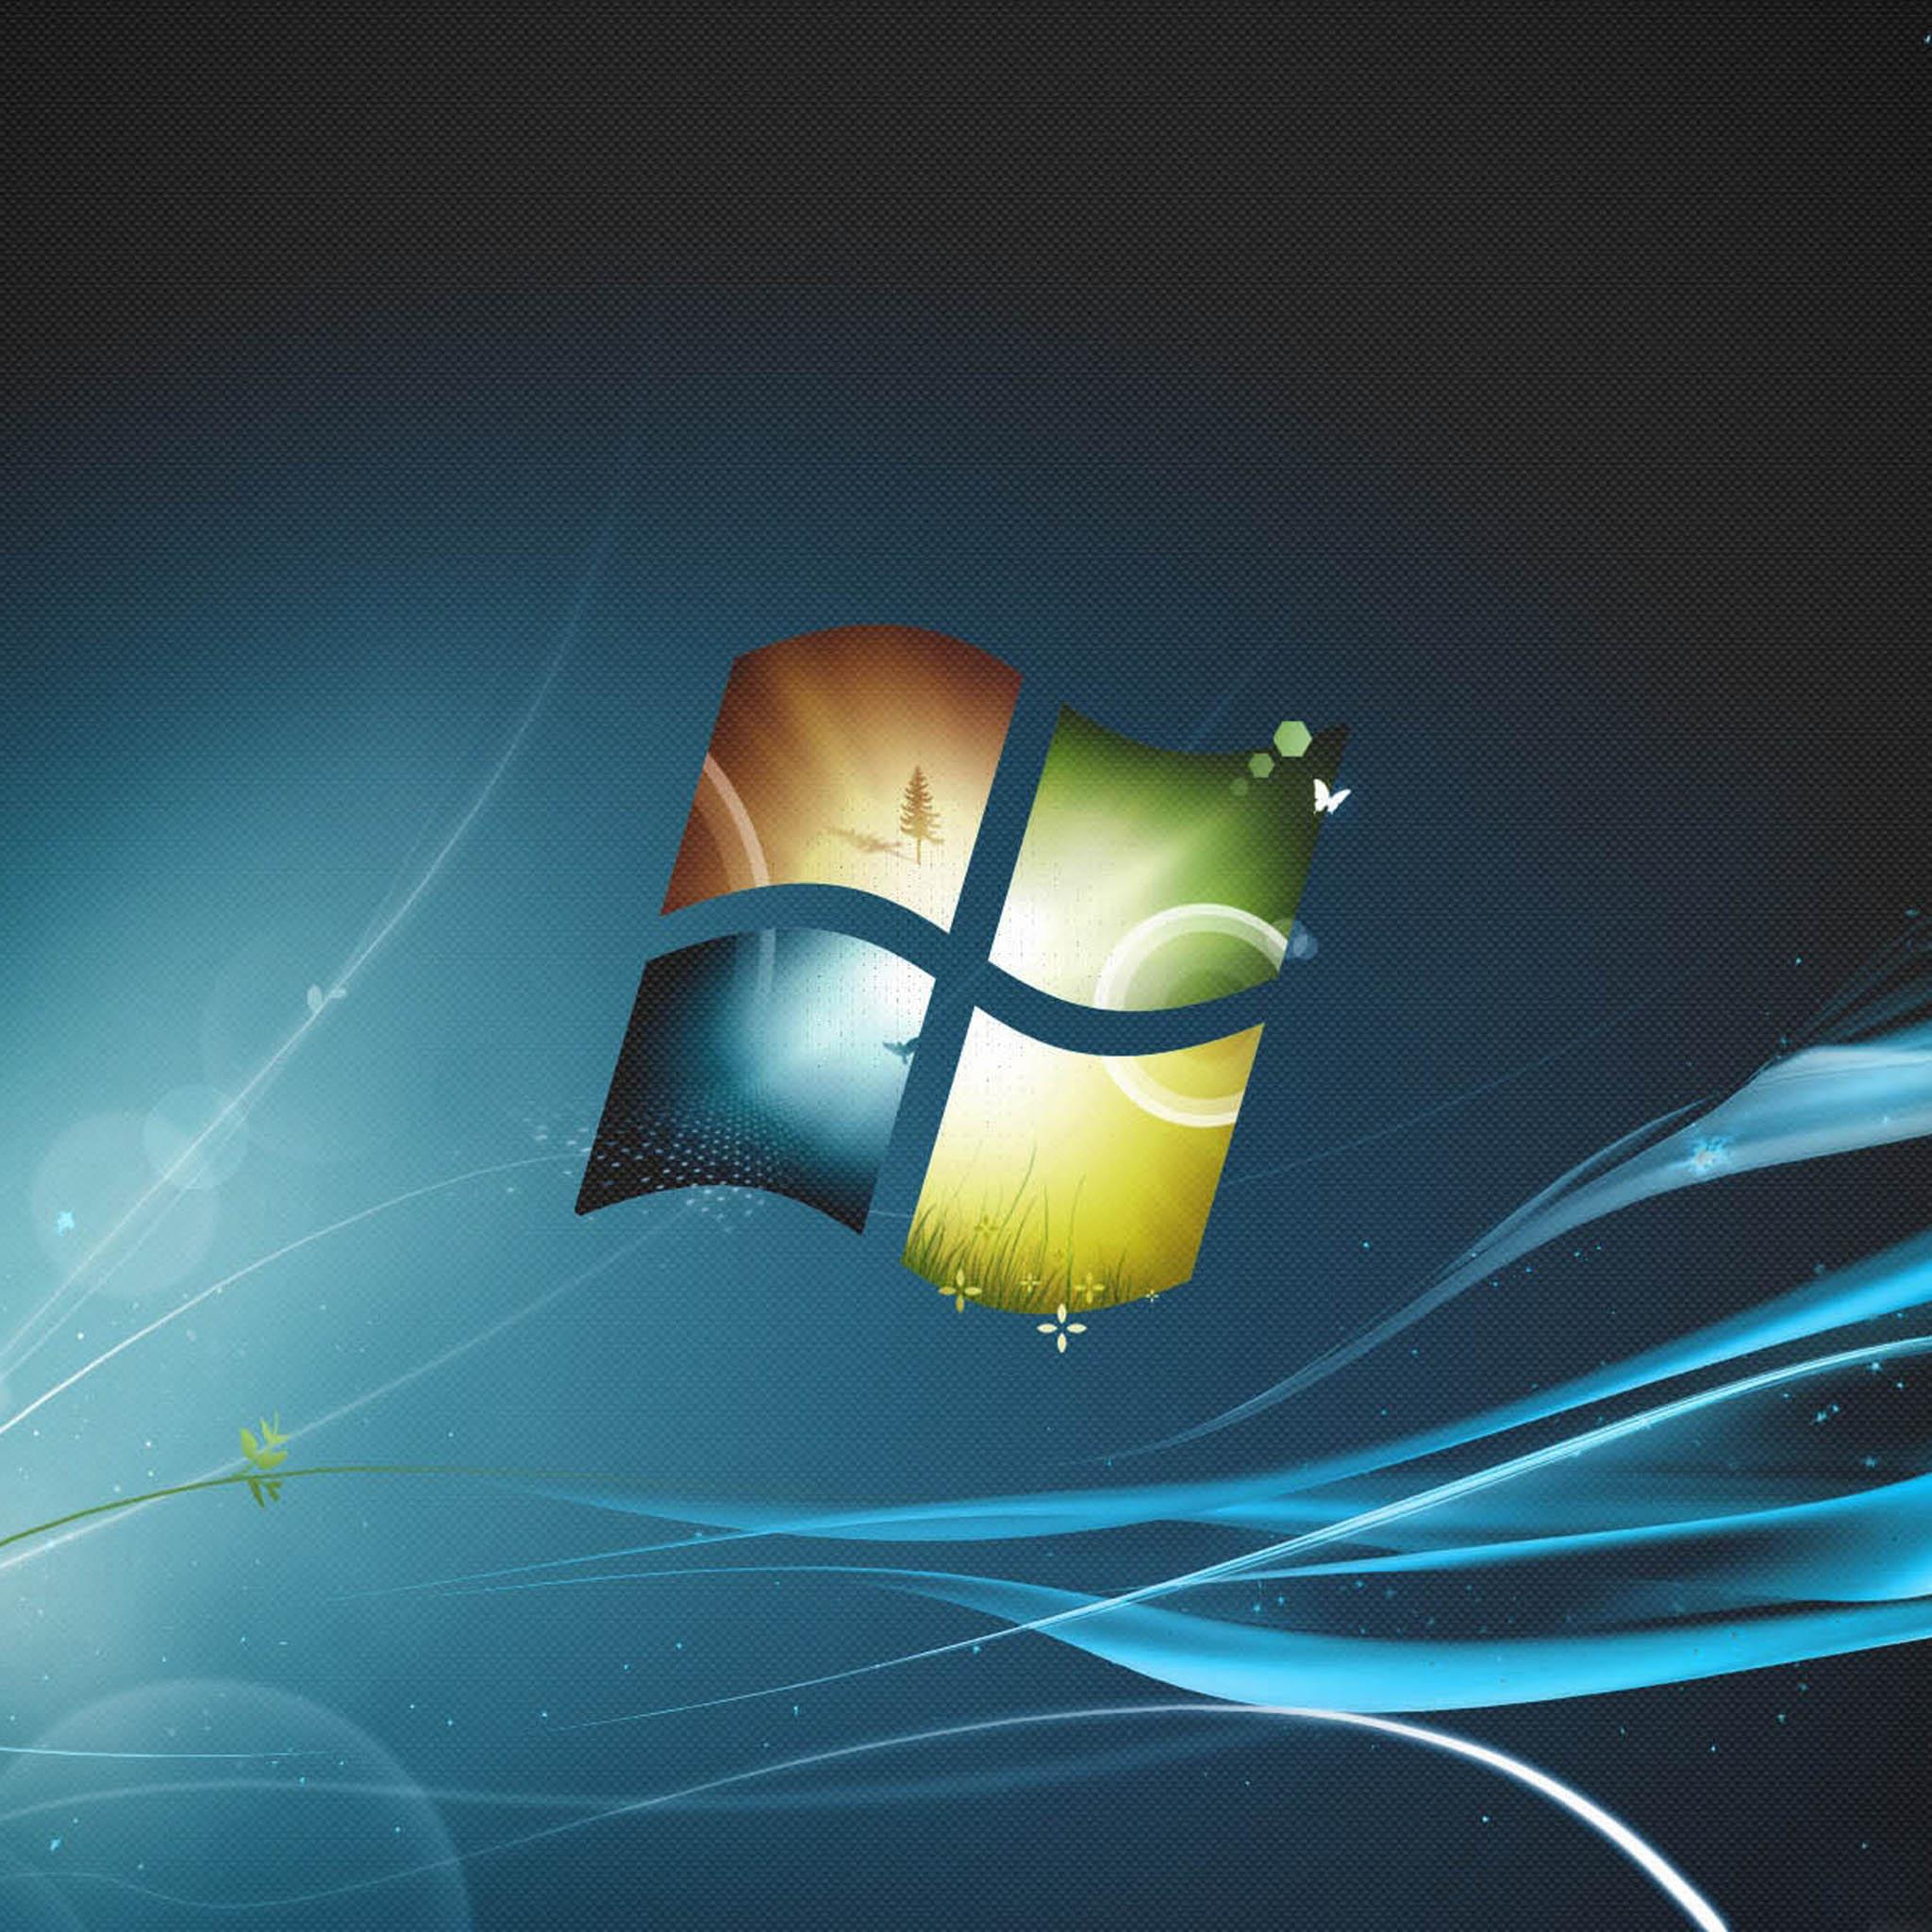 Windows 7 Touch Ipad Wallpaper Desktop Ipad タブレット壁紙